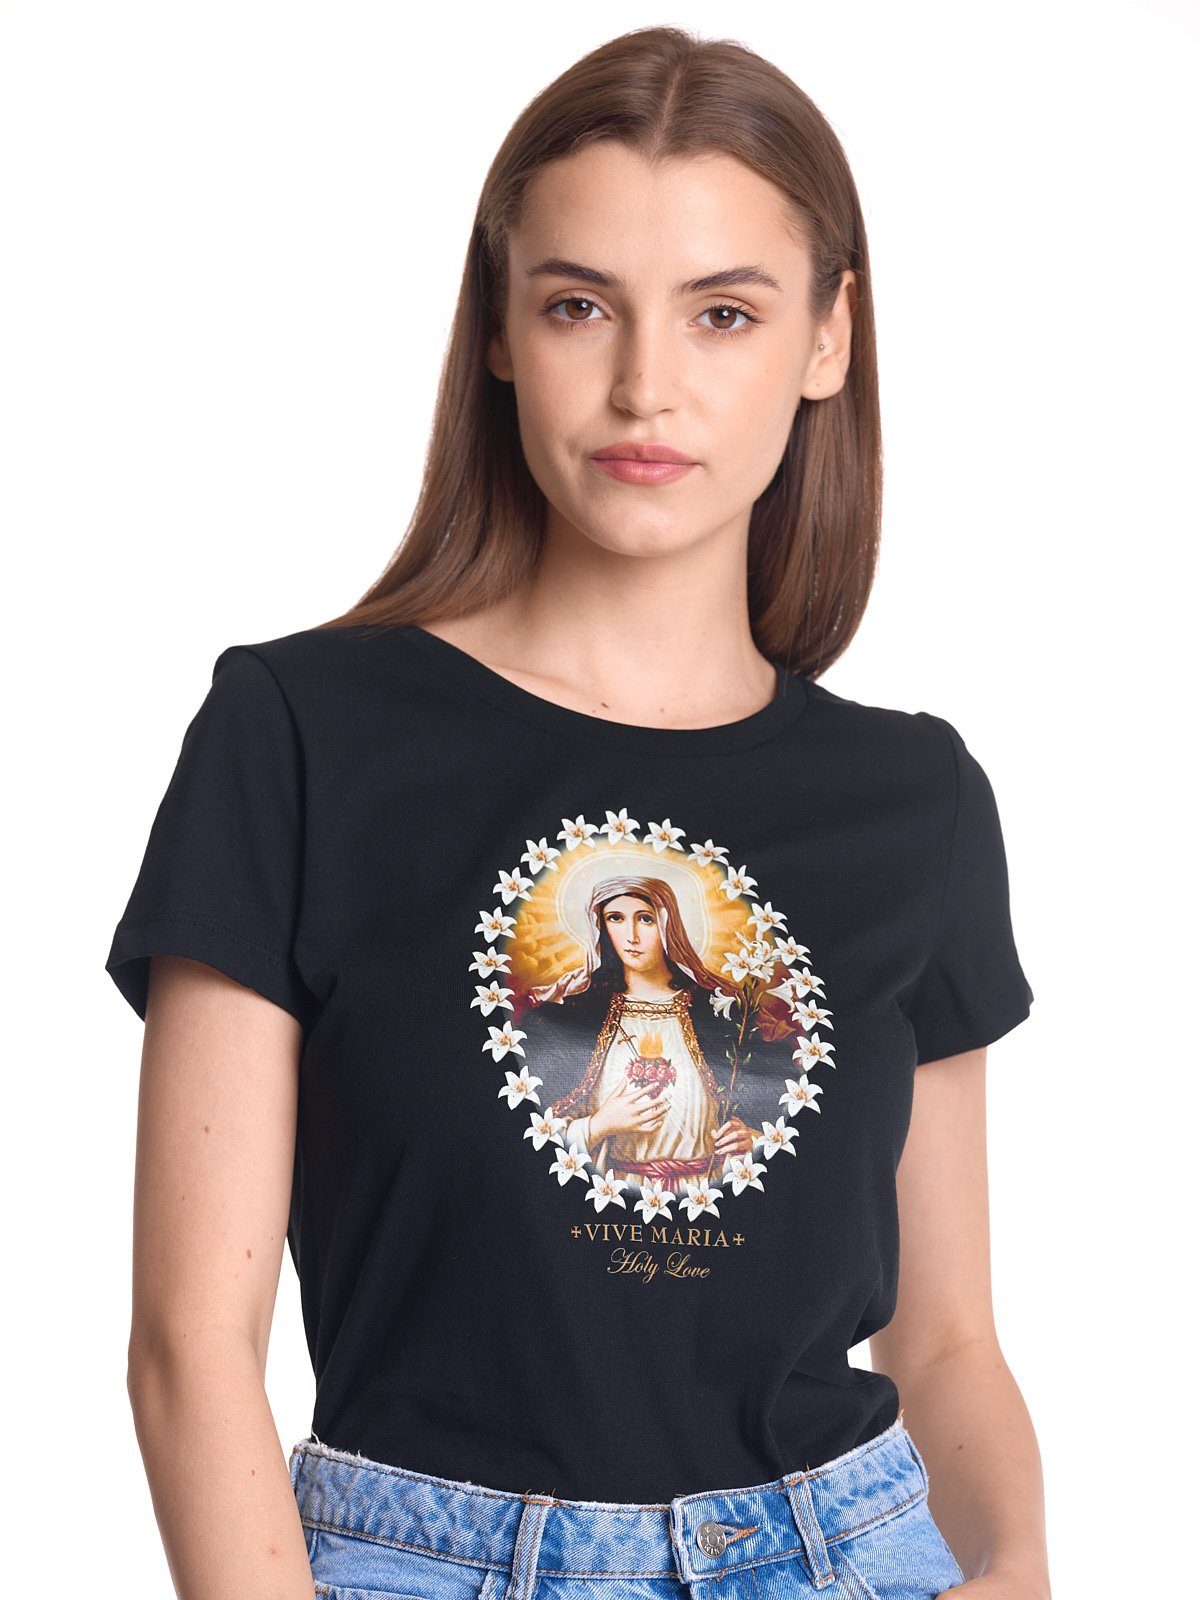 Maria Vive Love schwarz T-Shirt Holy